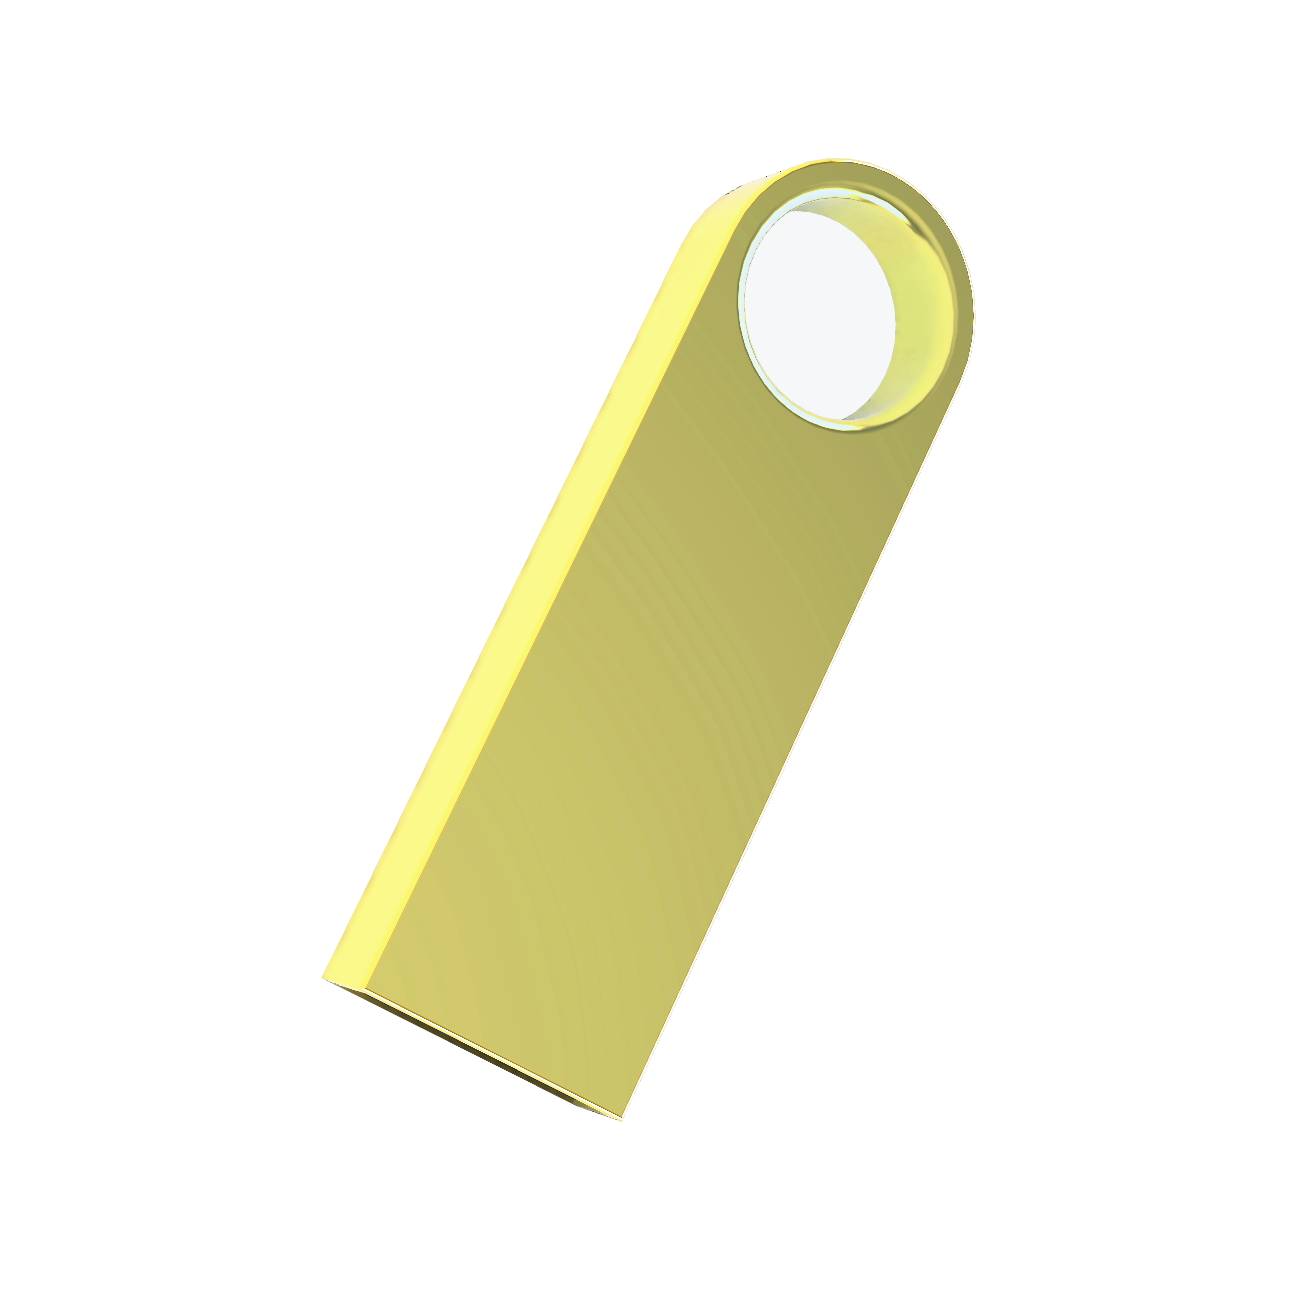 USB GERMANY ® SE09 128 GB) USB-Stick (Gold